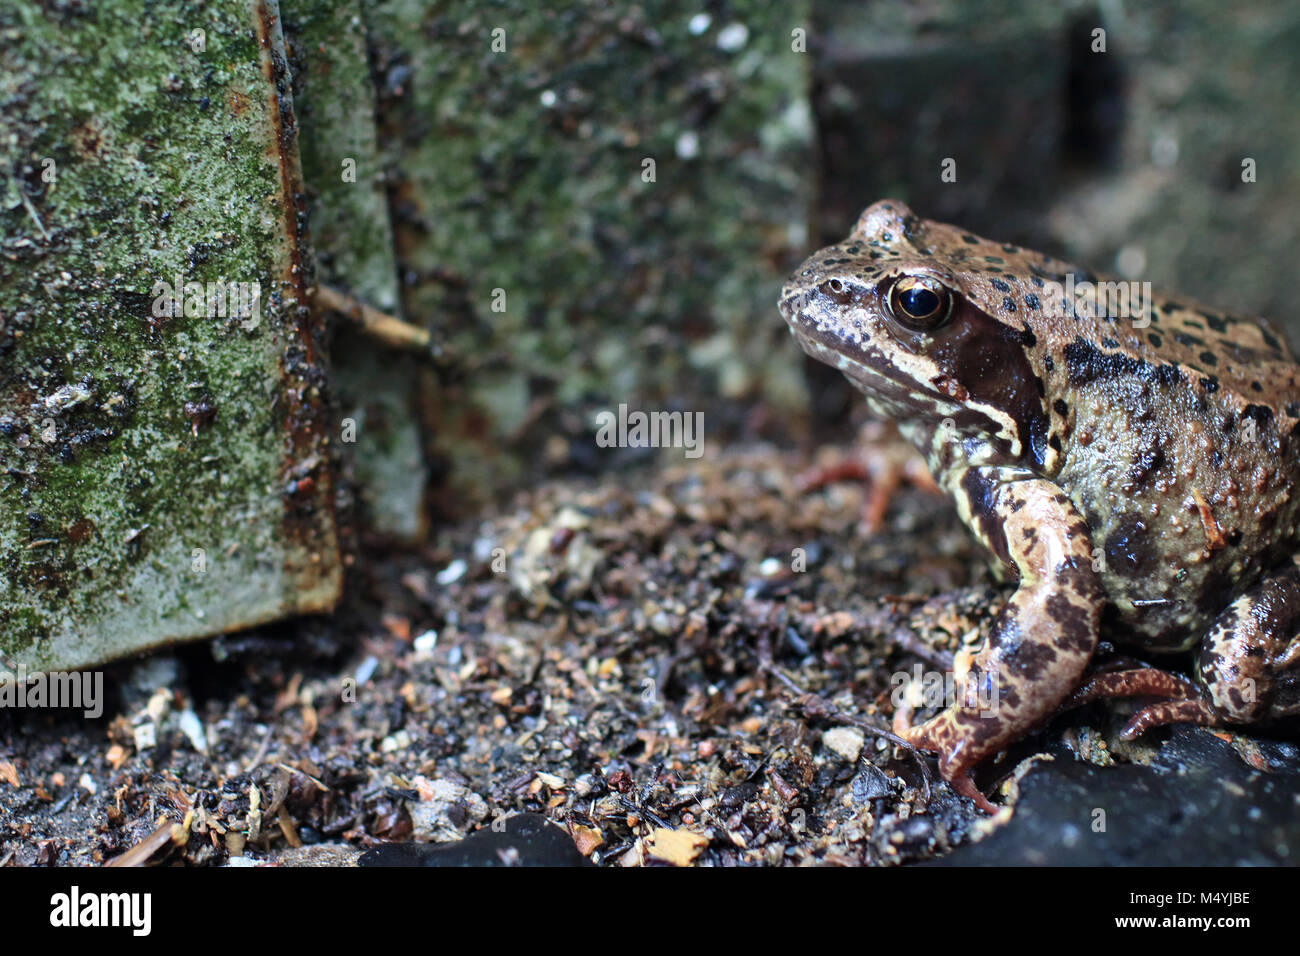 Unauffällig motley spotted Frog in der Wildnis Stockfoto